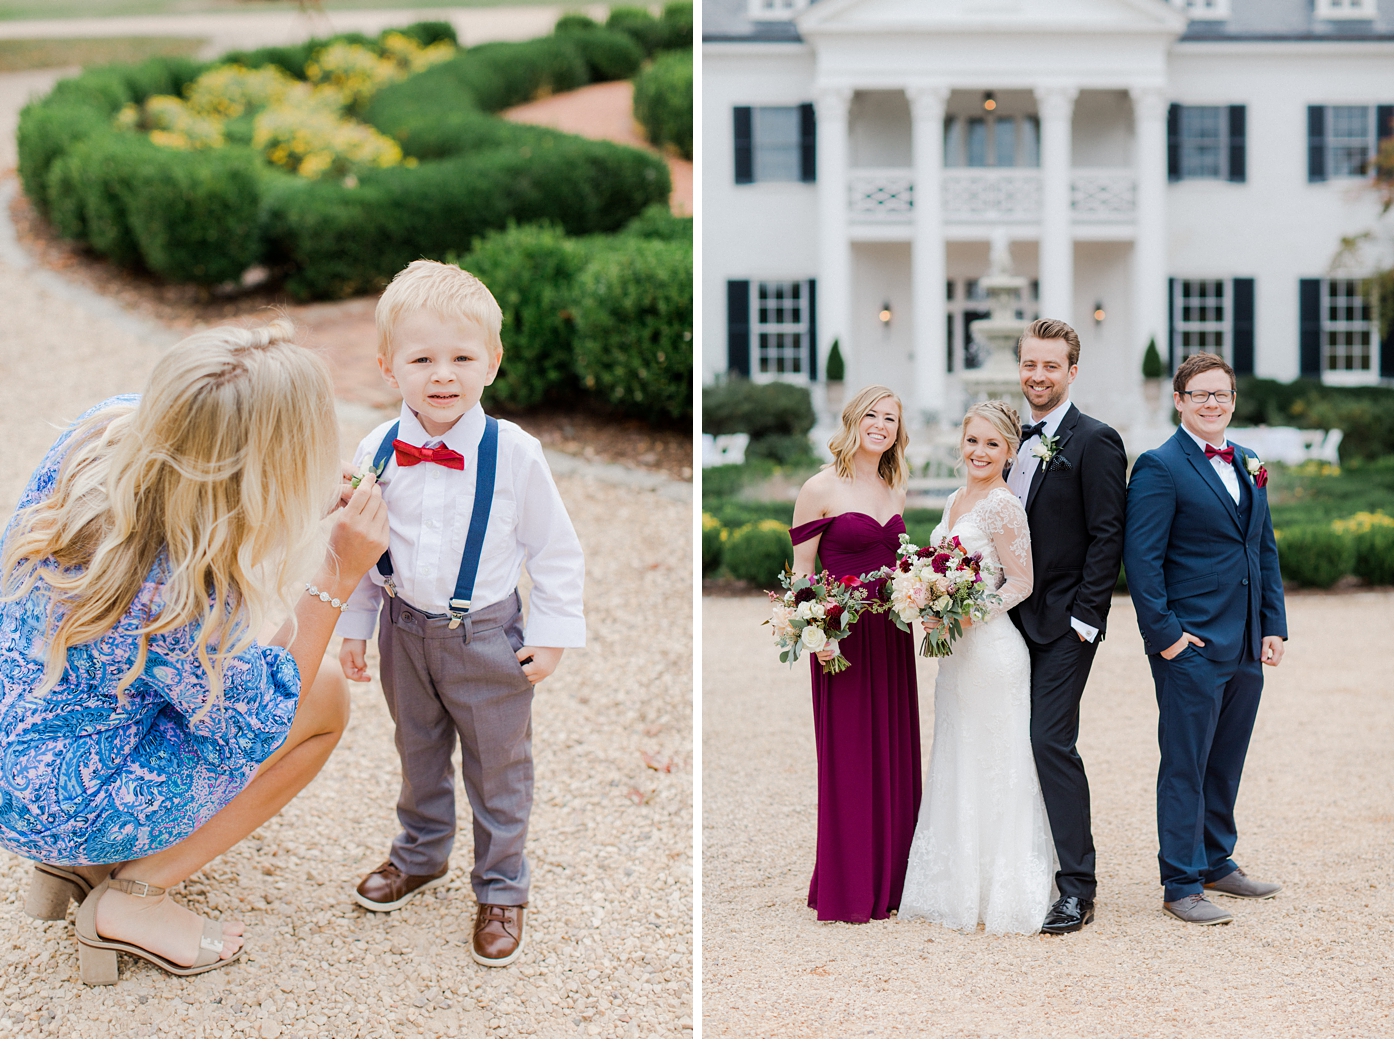 Keswick Vineyards Wedding in Charlottesville, Virginia by Alisandra Photography